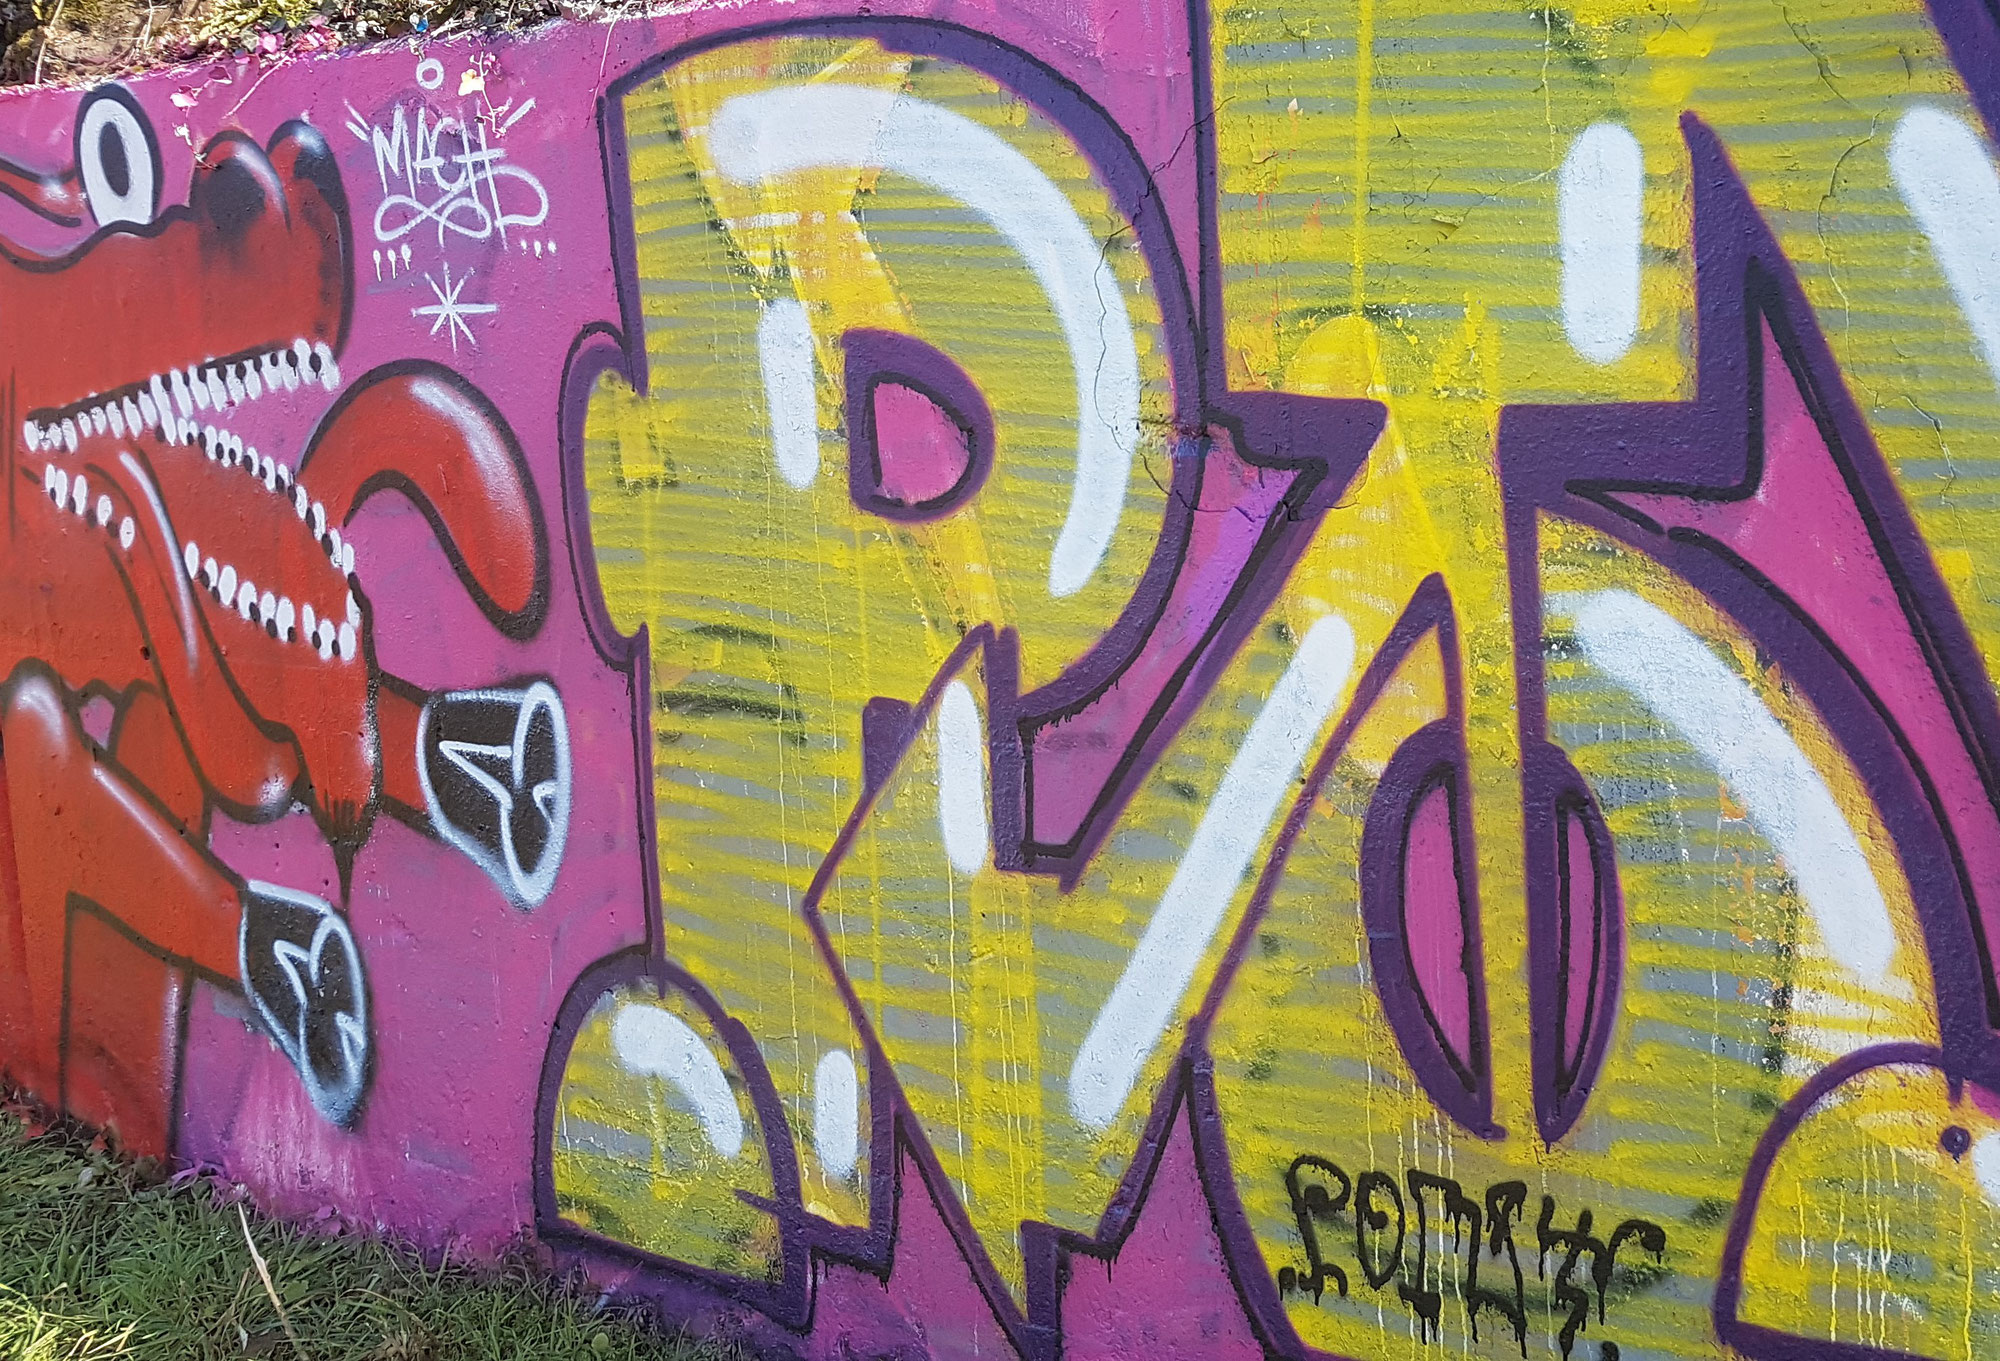 Jugendclub startet Graffiti - Wettbewerb